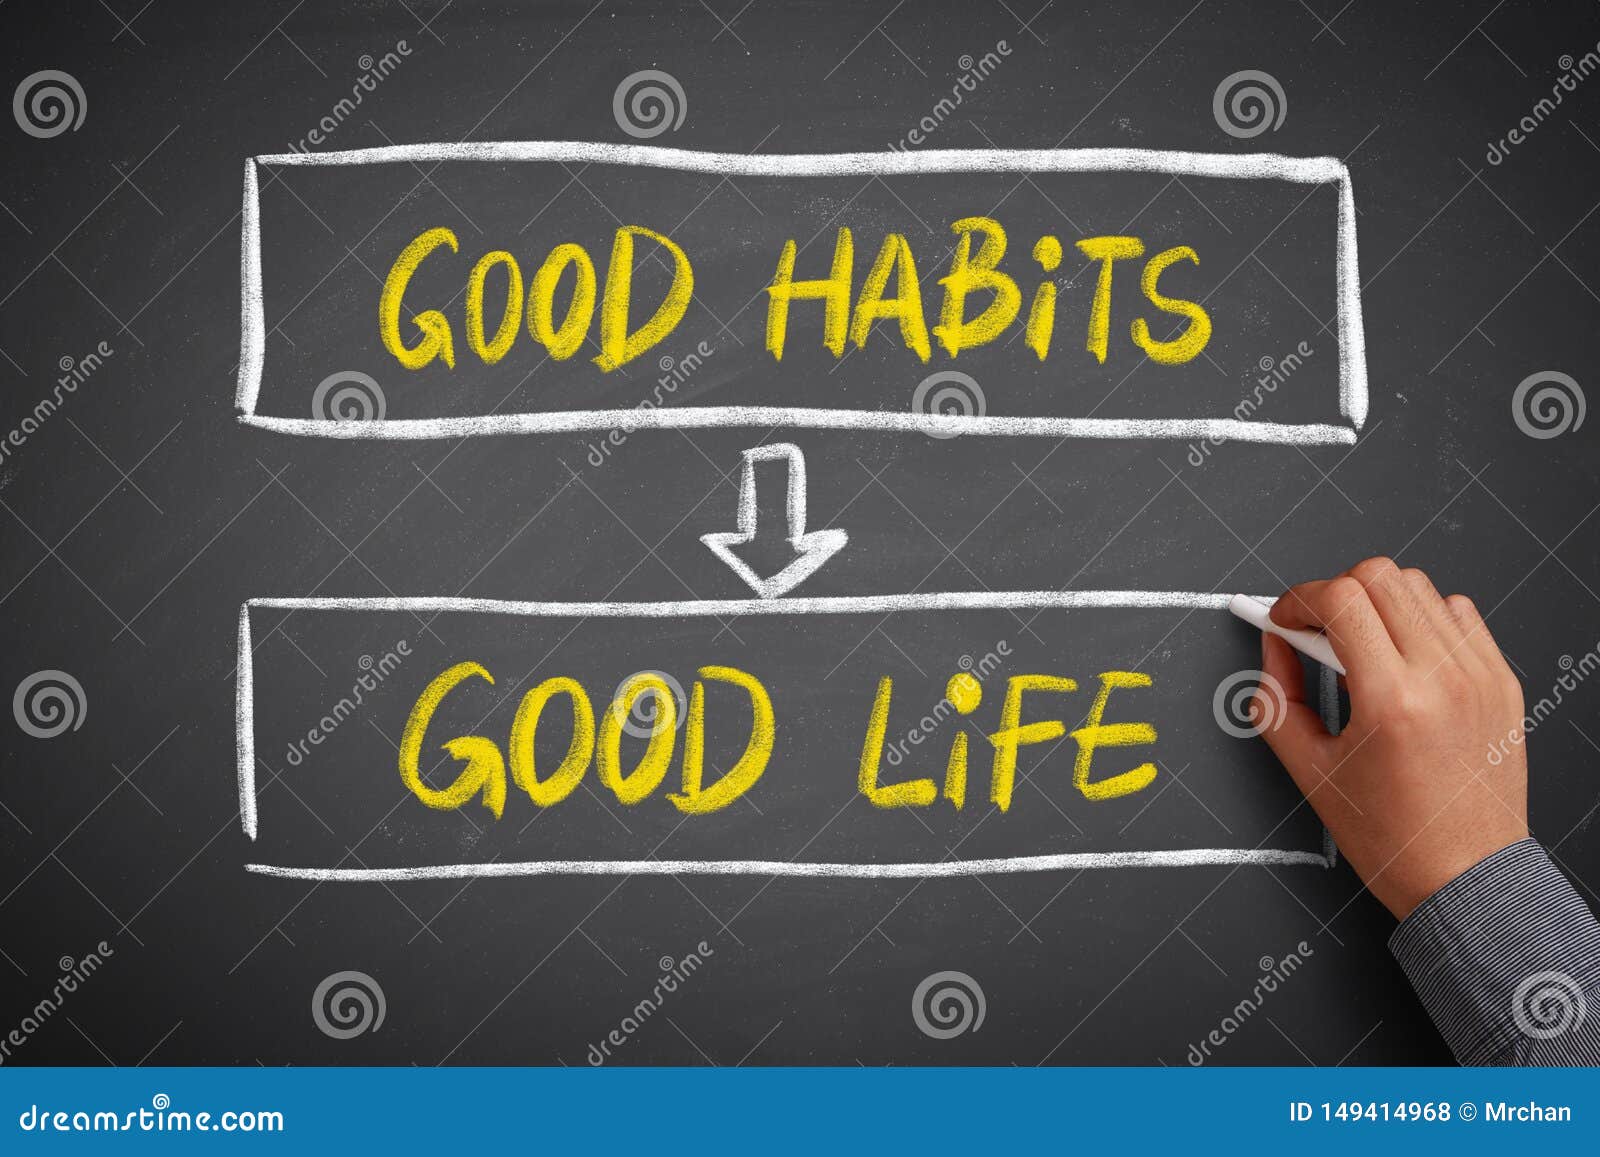 good habits results good life